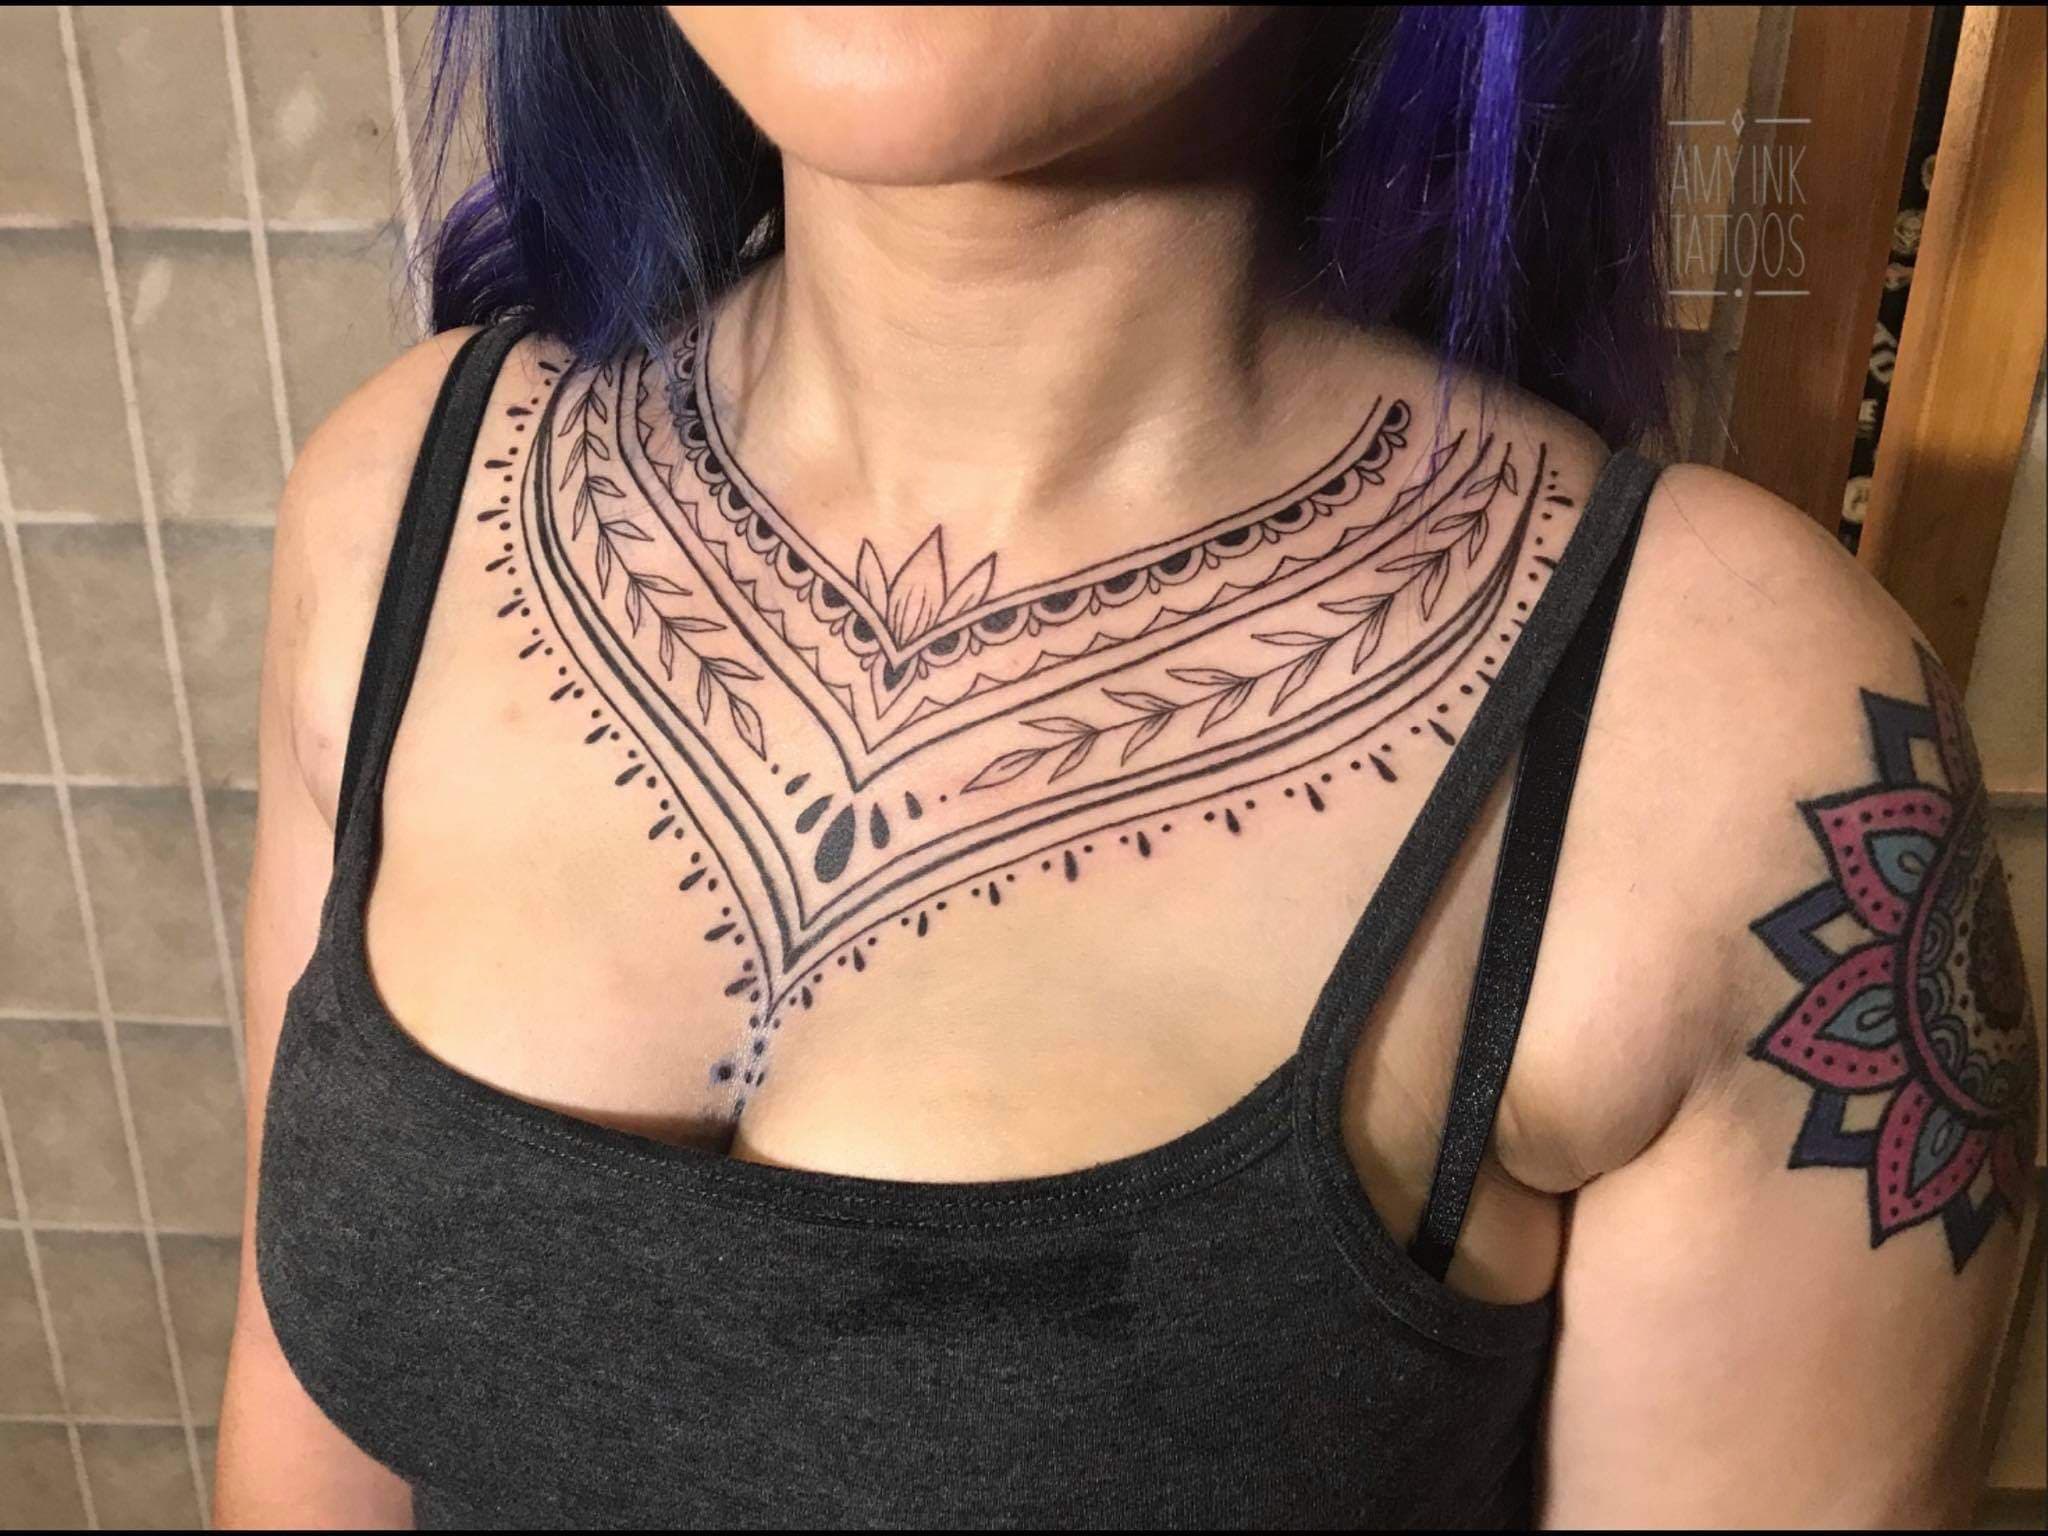 Amy  Vivid Ink Tattoos  The UK Tattoo Studios Chain